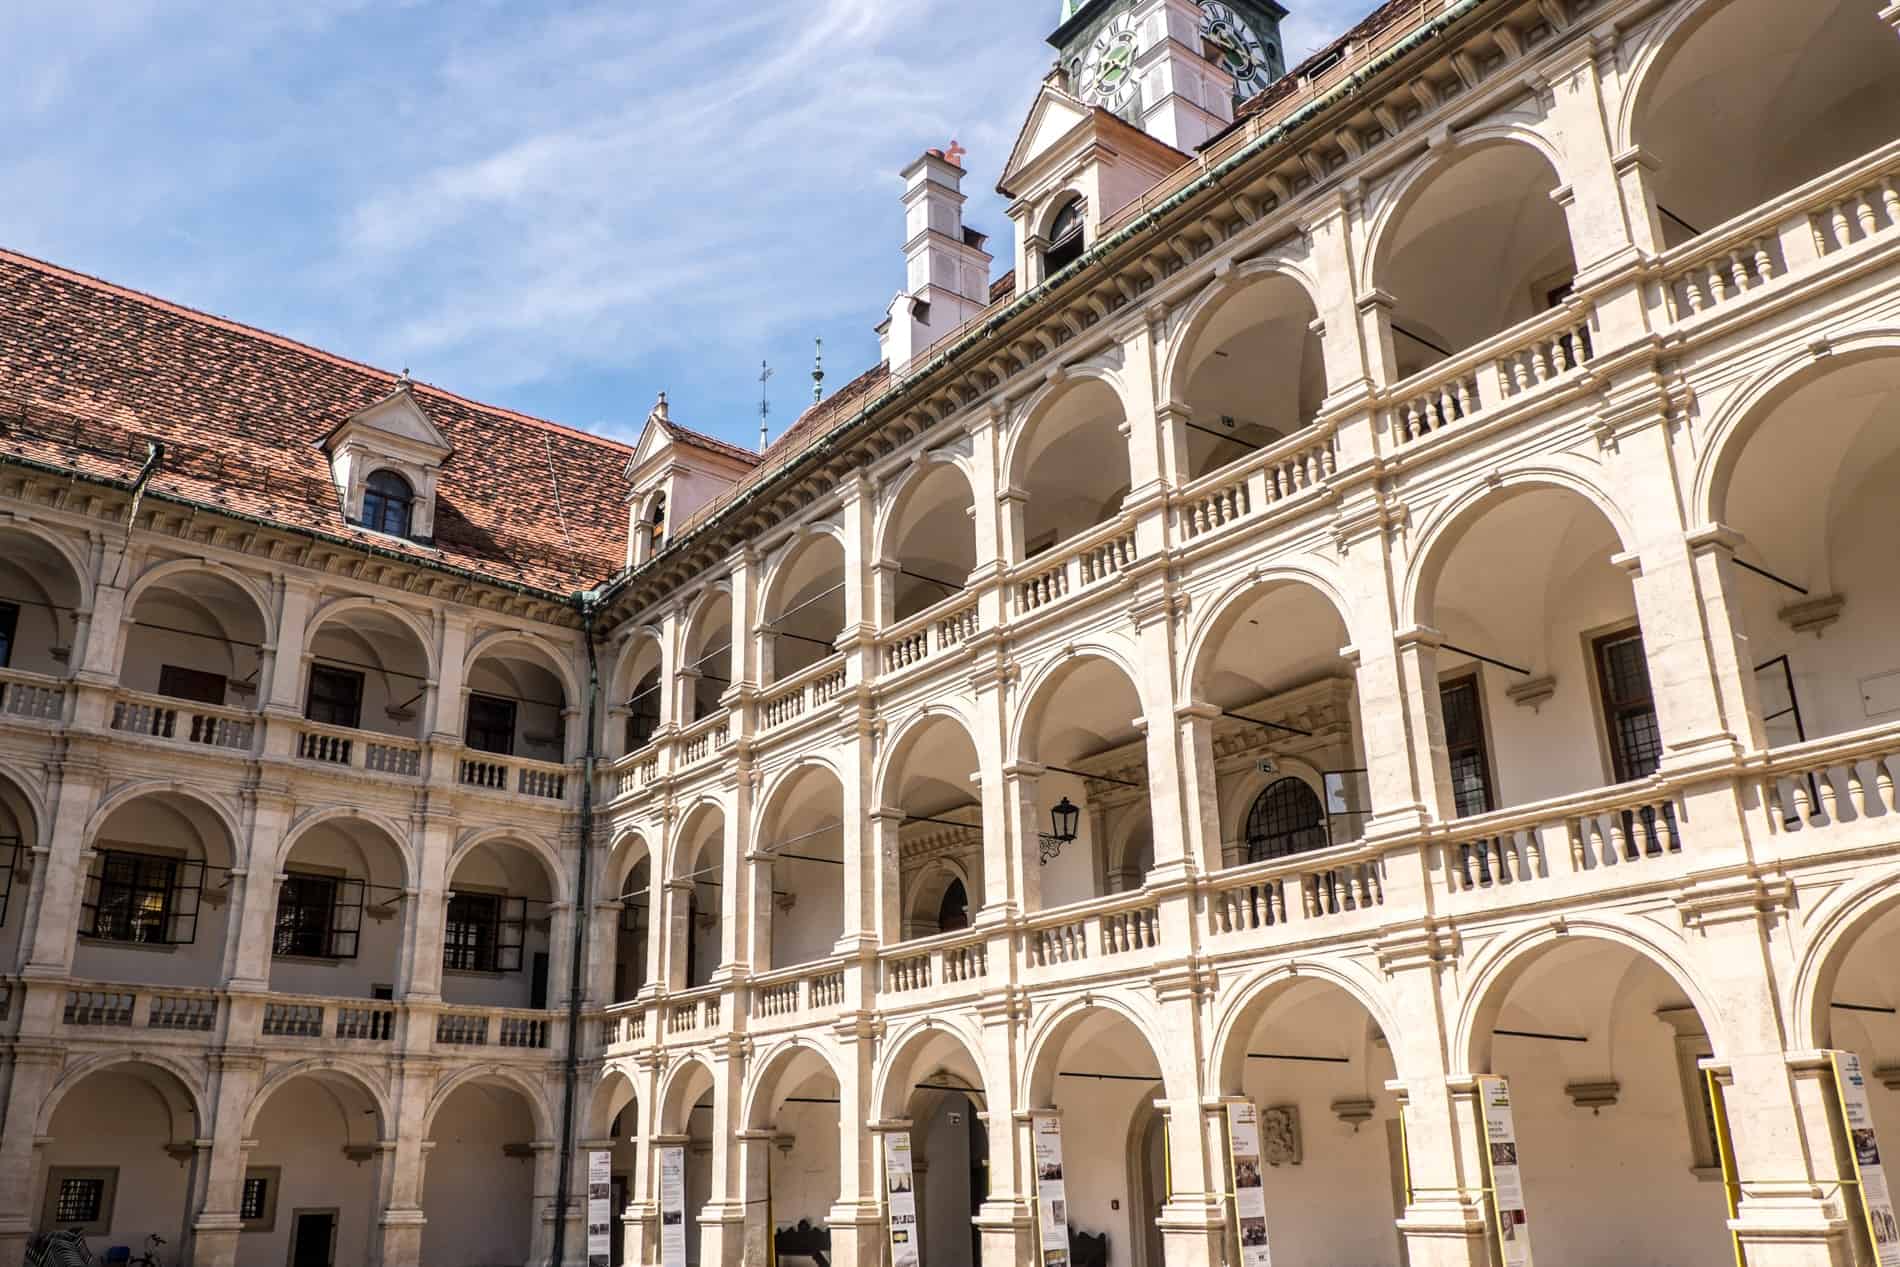 The three-tiered Italian Renaissance arcades of the Landhaus Courtyard in Graz, Austria.